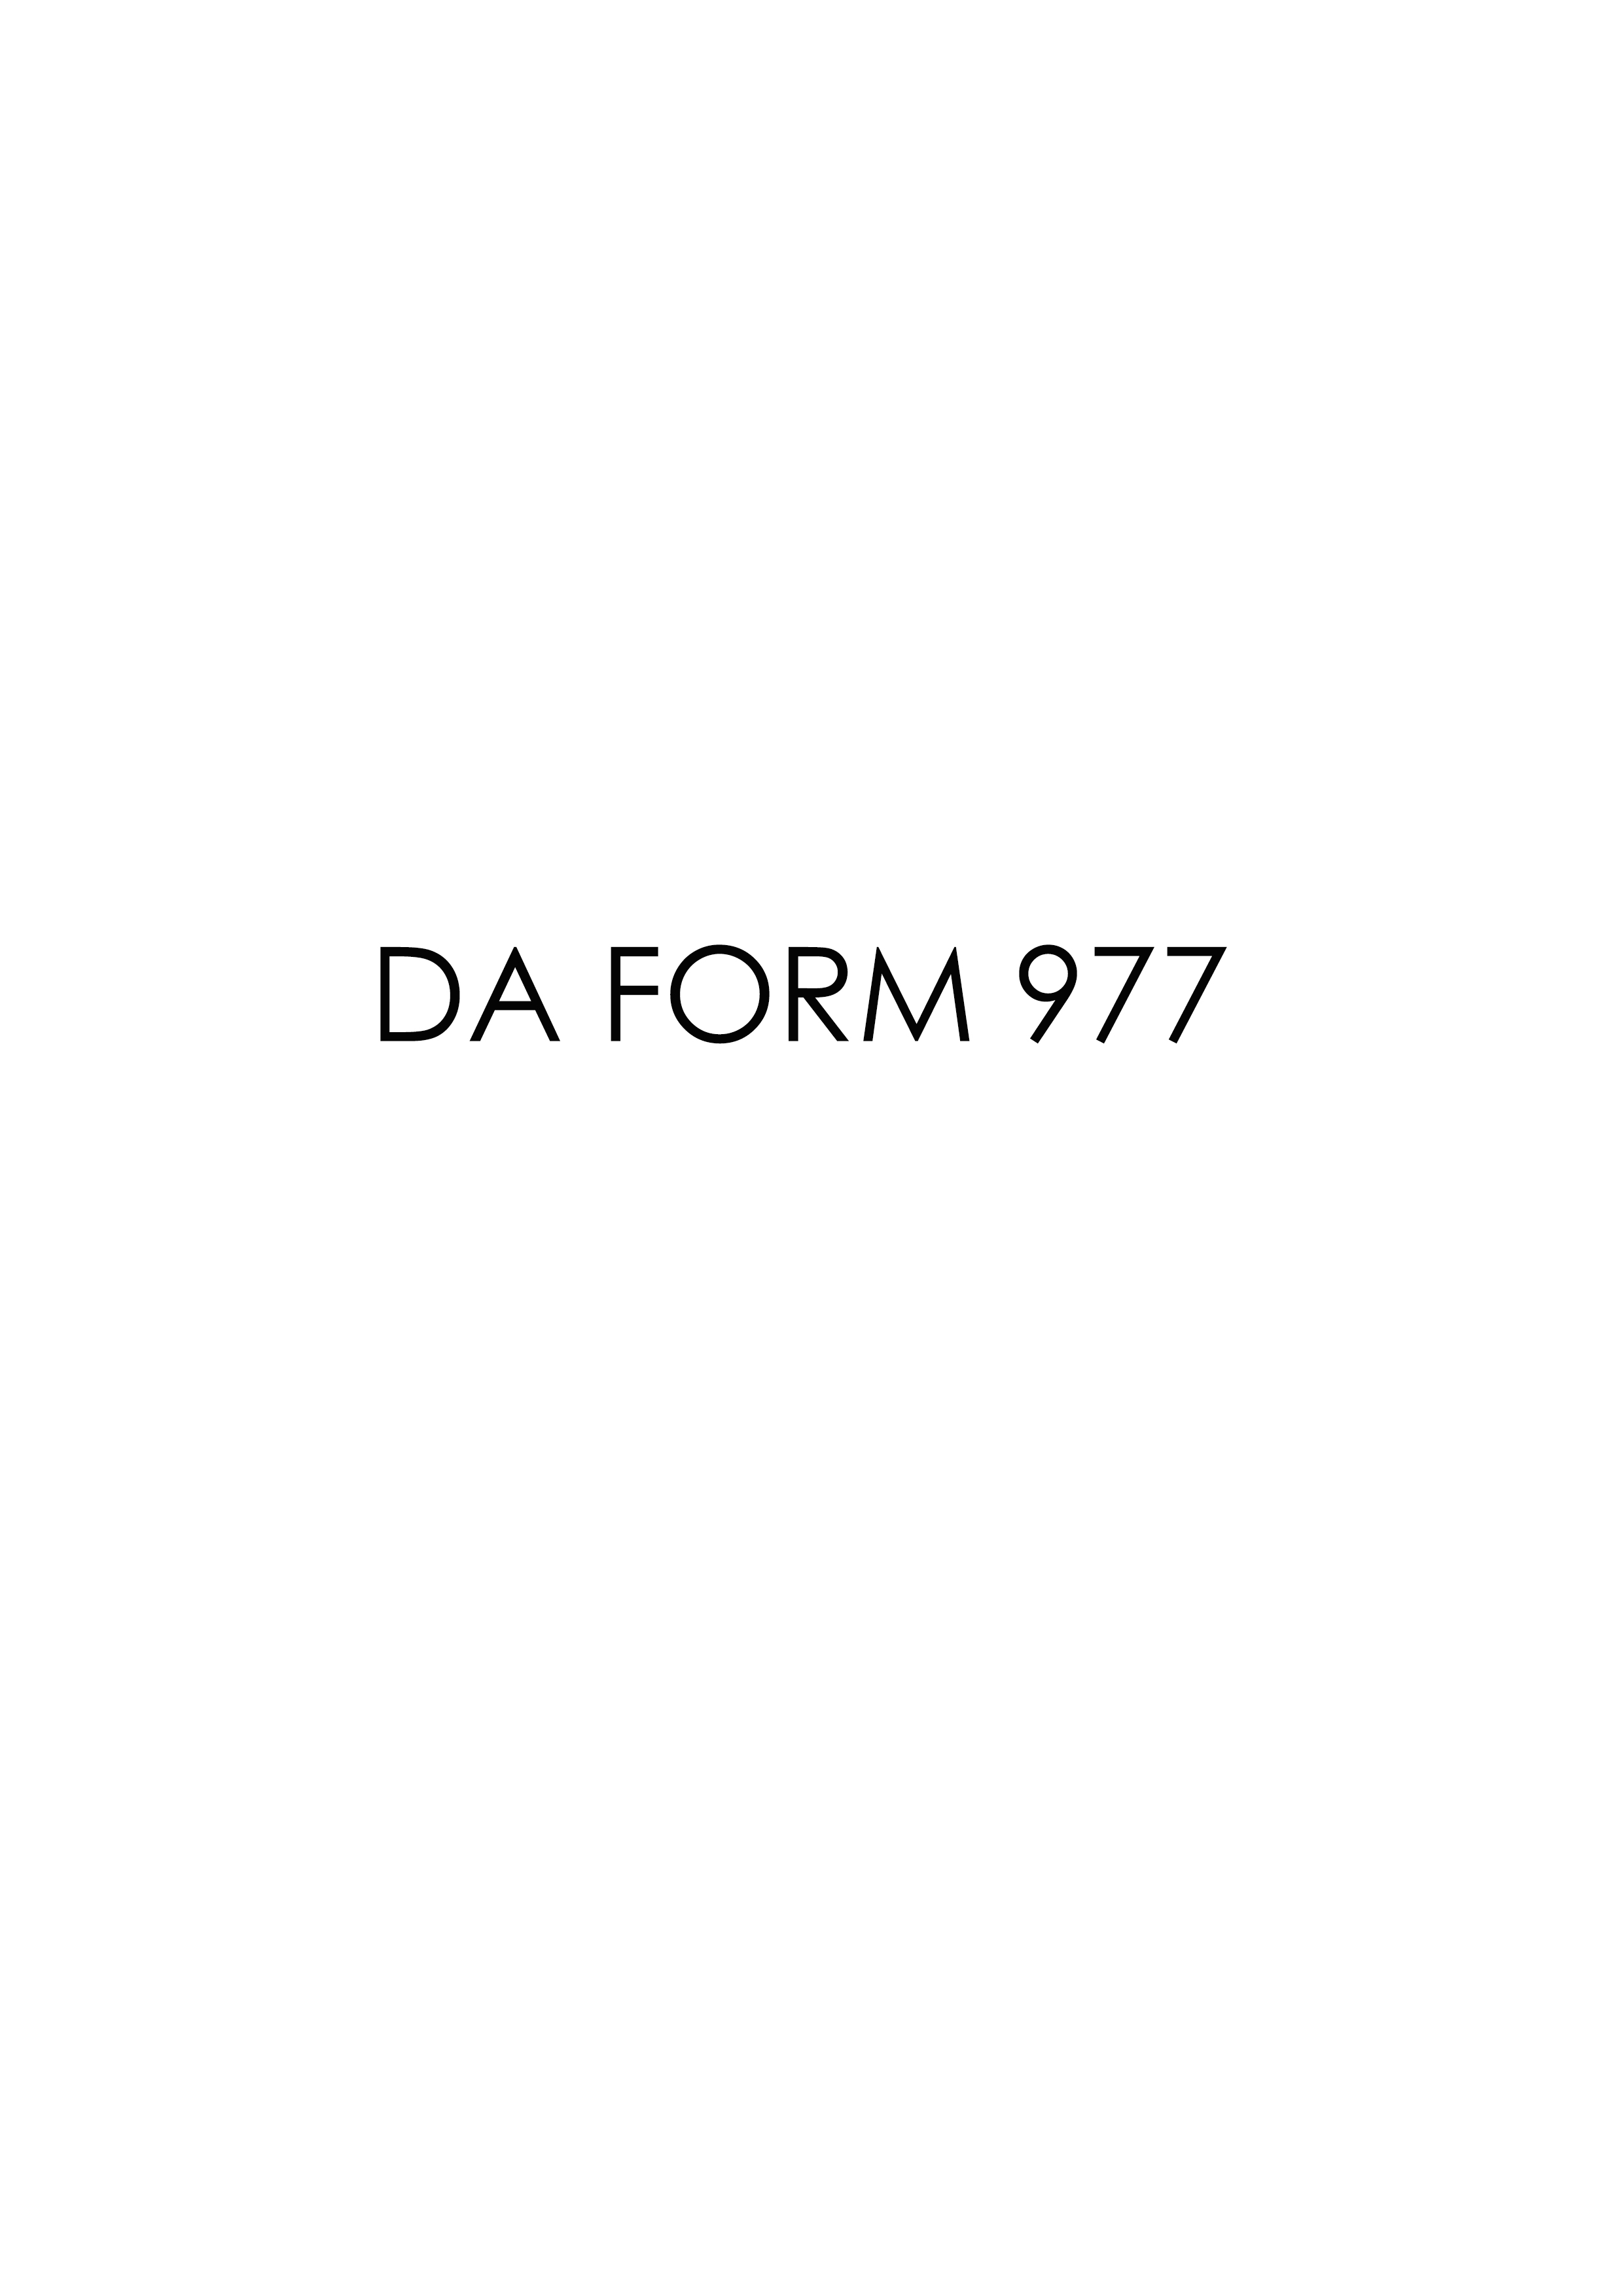 Download da 977 Form